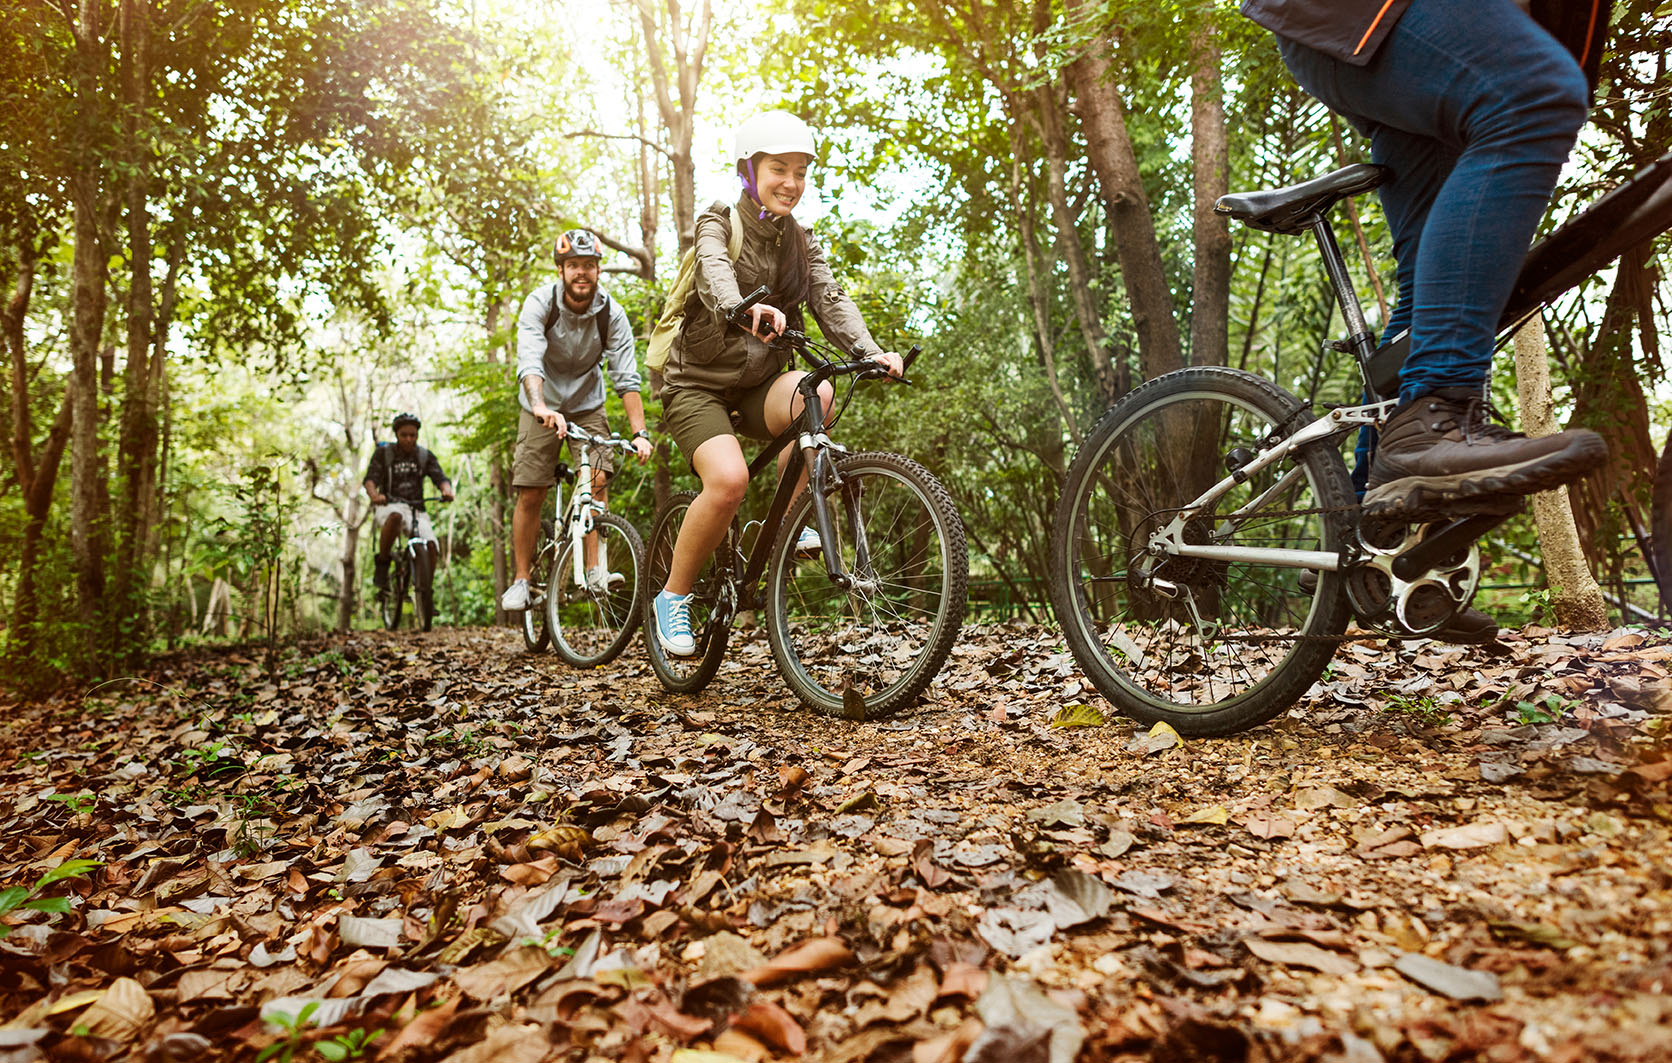 Group biking on a wooded trail